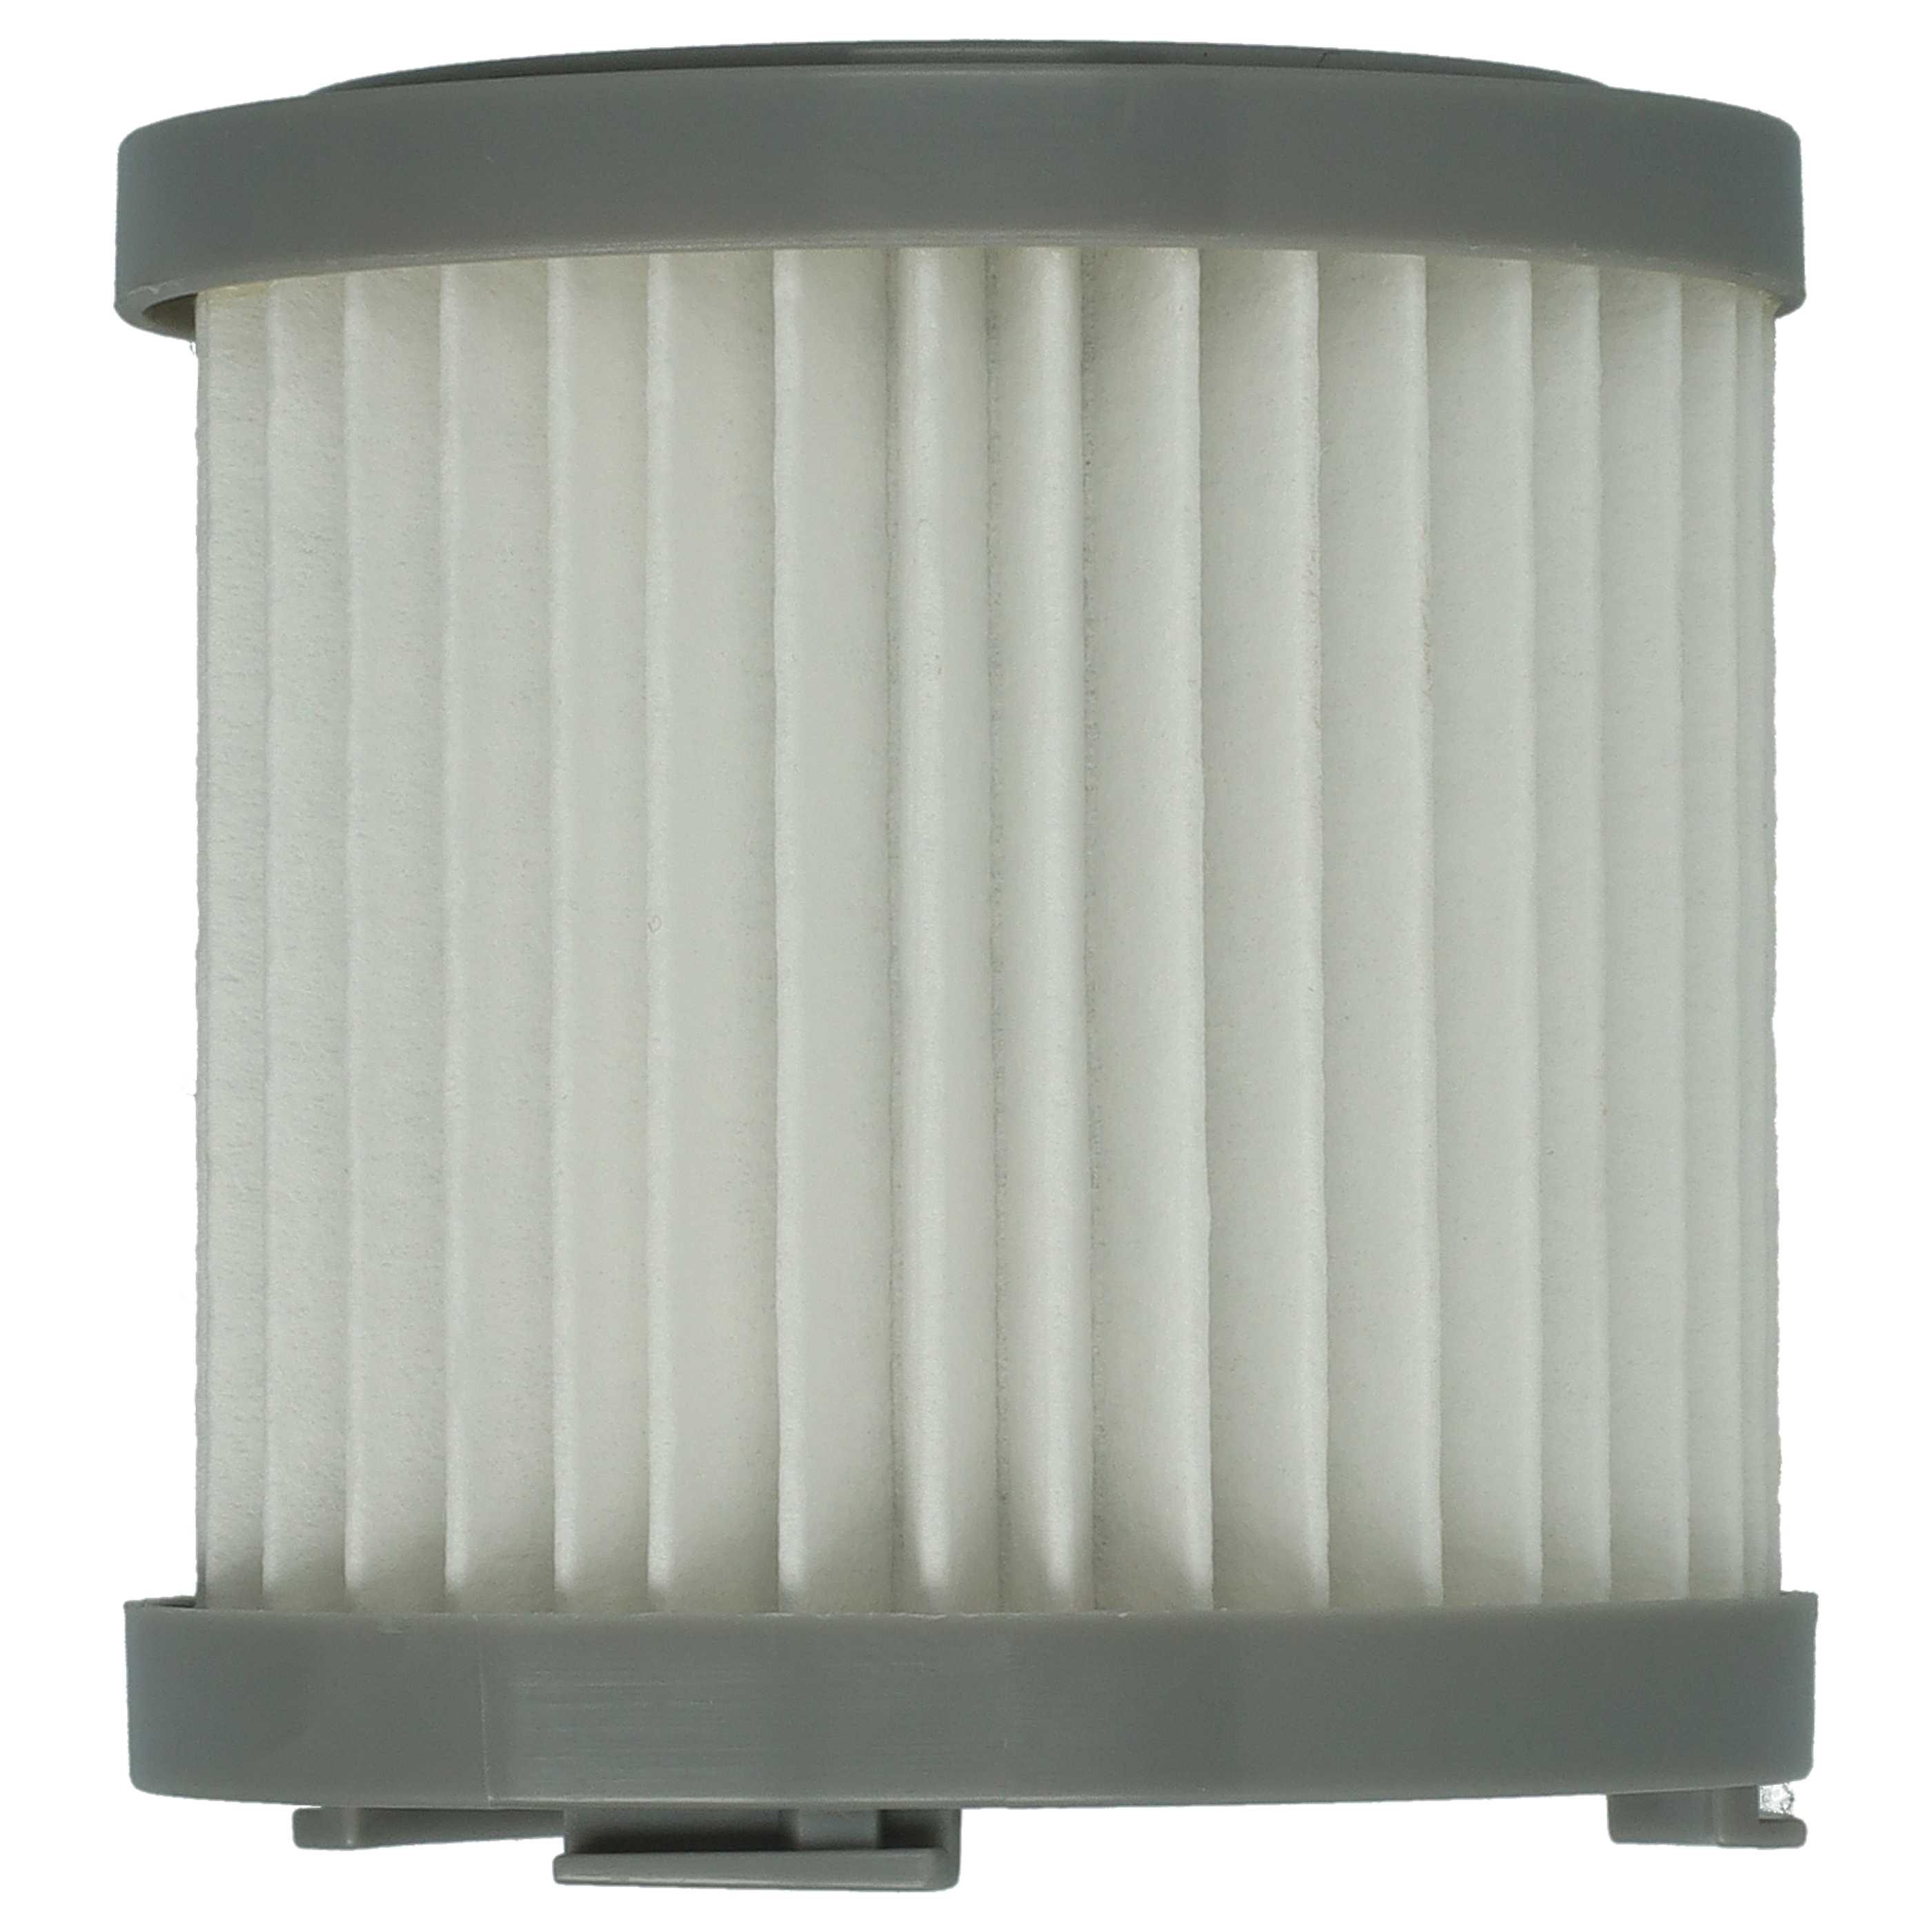 Filtro reemplaza AEG 4055453288 para aspiradora - filtro Hepa, blanco / gris